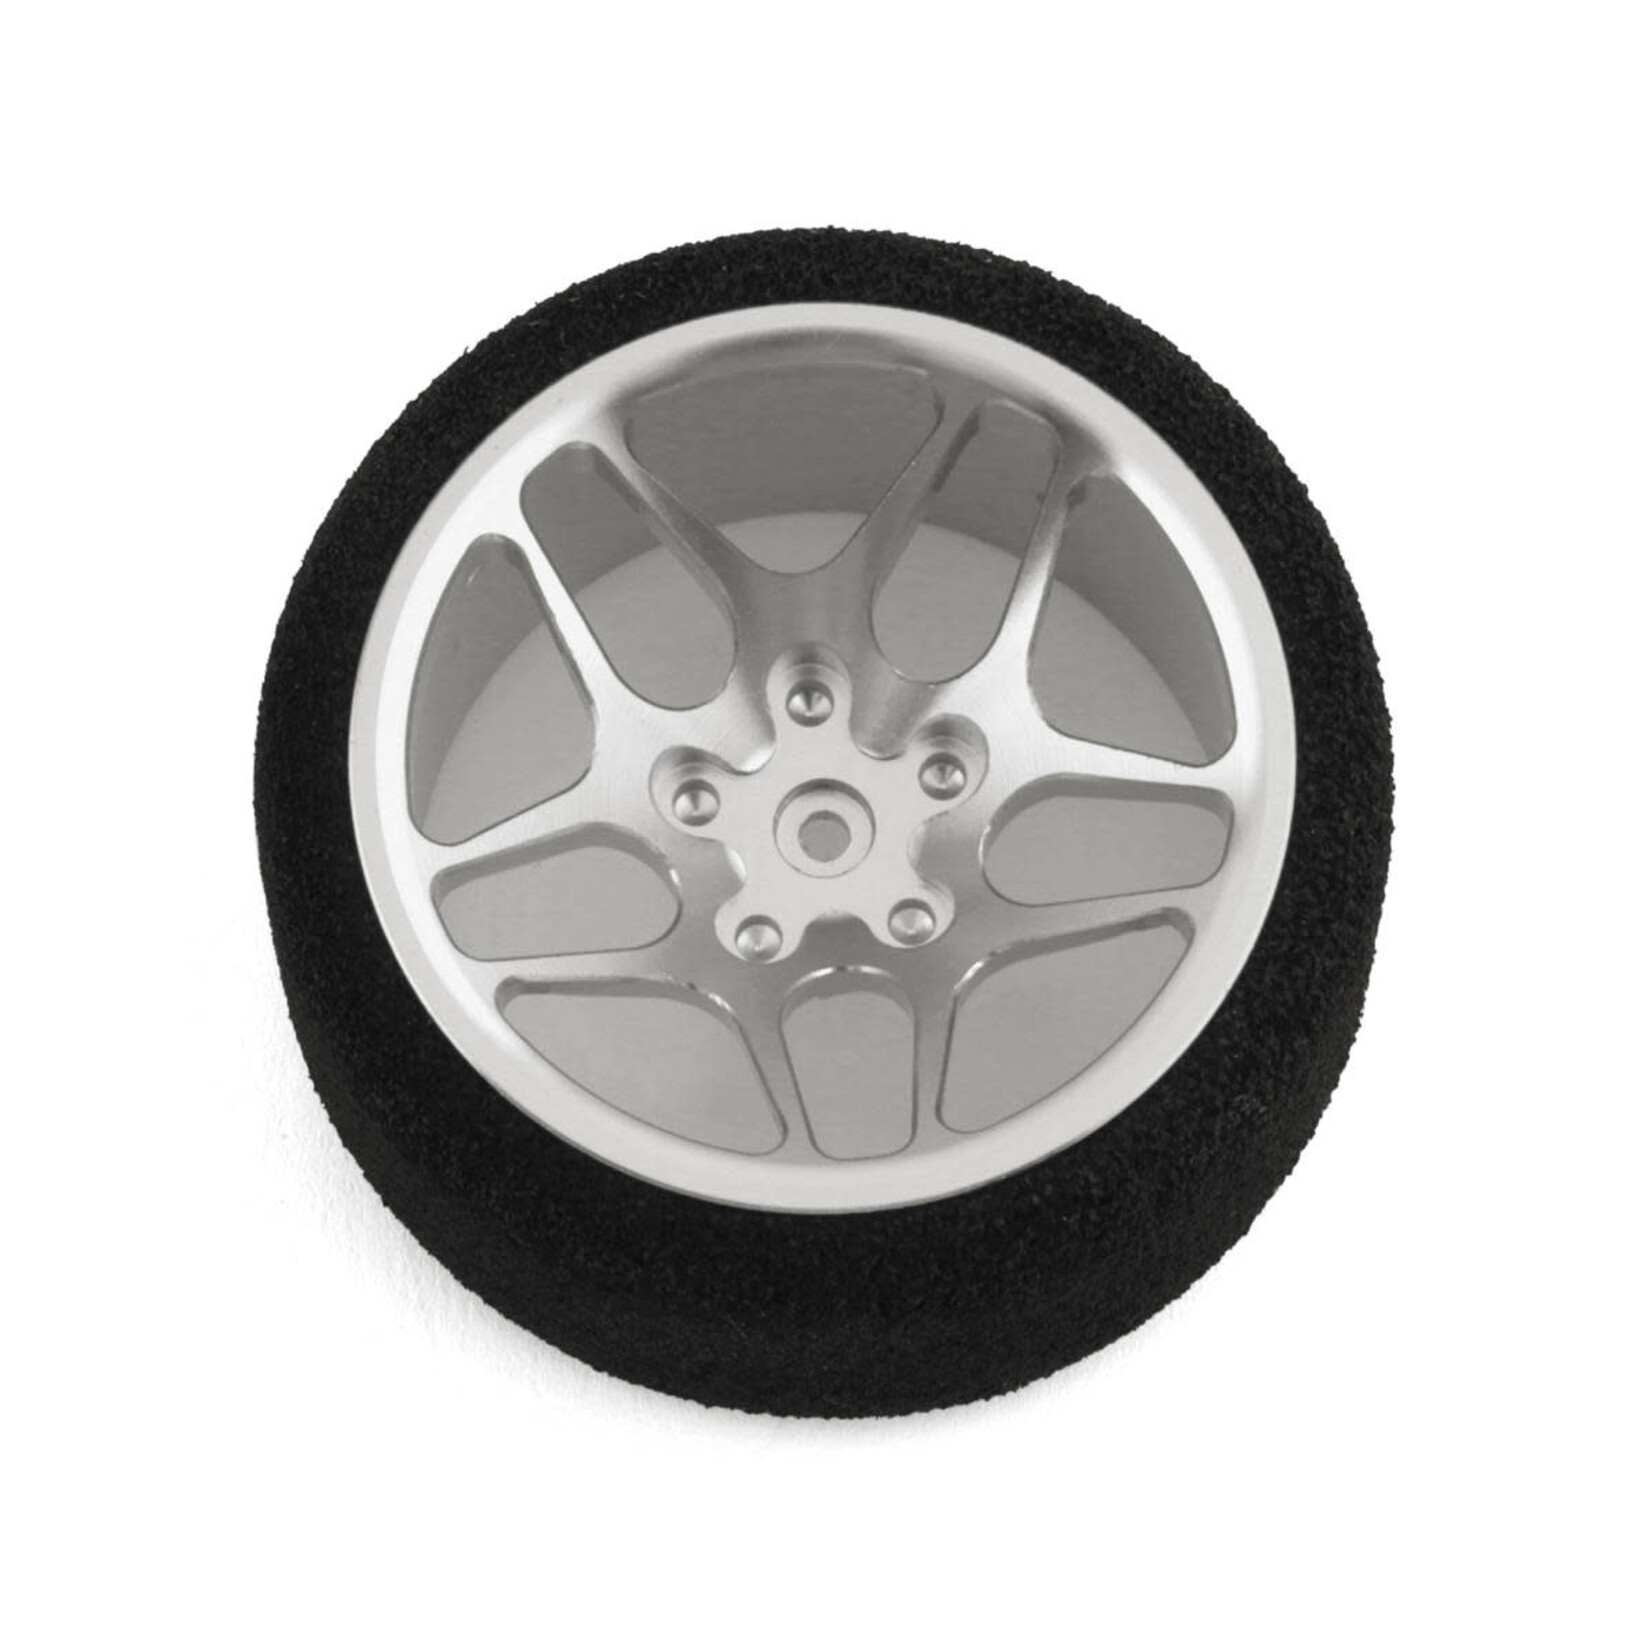 R-Design R-Design Spektrum DX5 10-Spoke Ultrawide Steering Wheel (Silver) #RDD7310